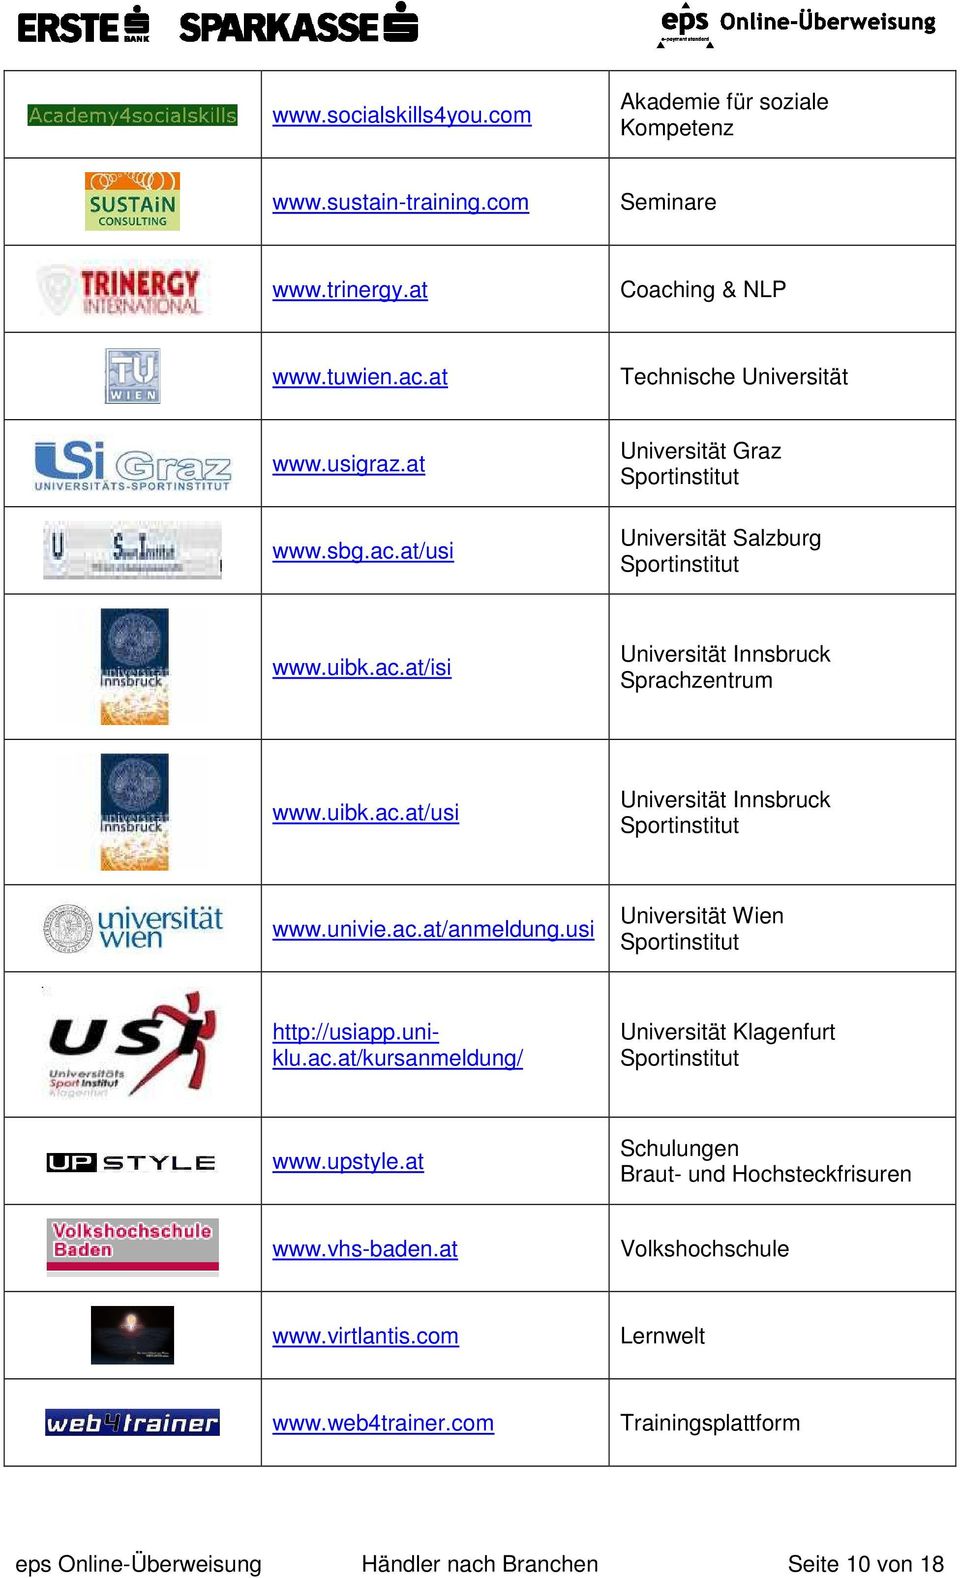 univie.ac.at/anmeldung.usi Universität Wien Sportinstitut http://usiapp.uniklu.ac.at/kursanmeldung/ Universität Klagenfurt Sportinstitut www.upstyle.